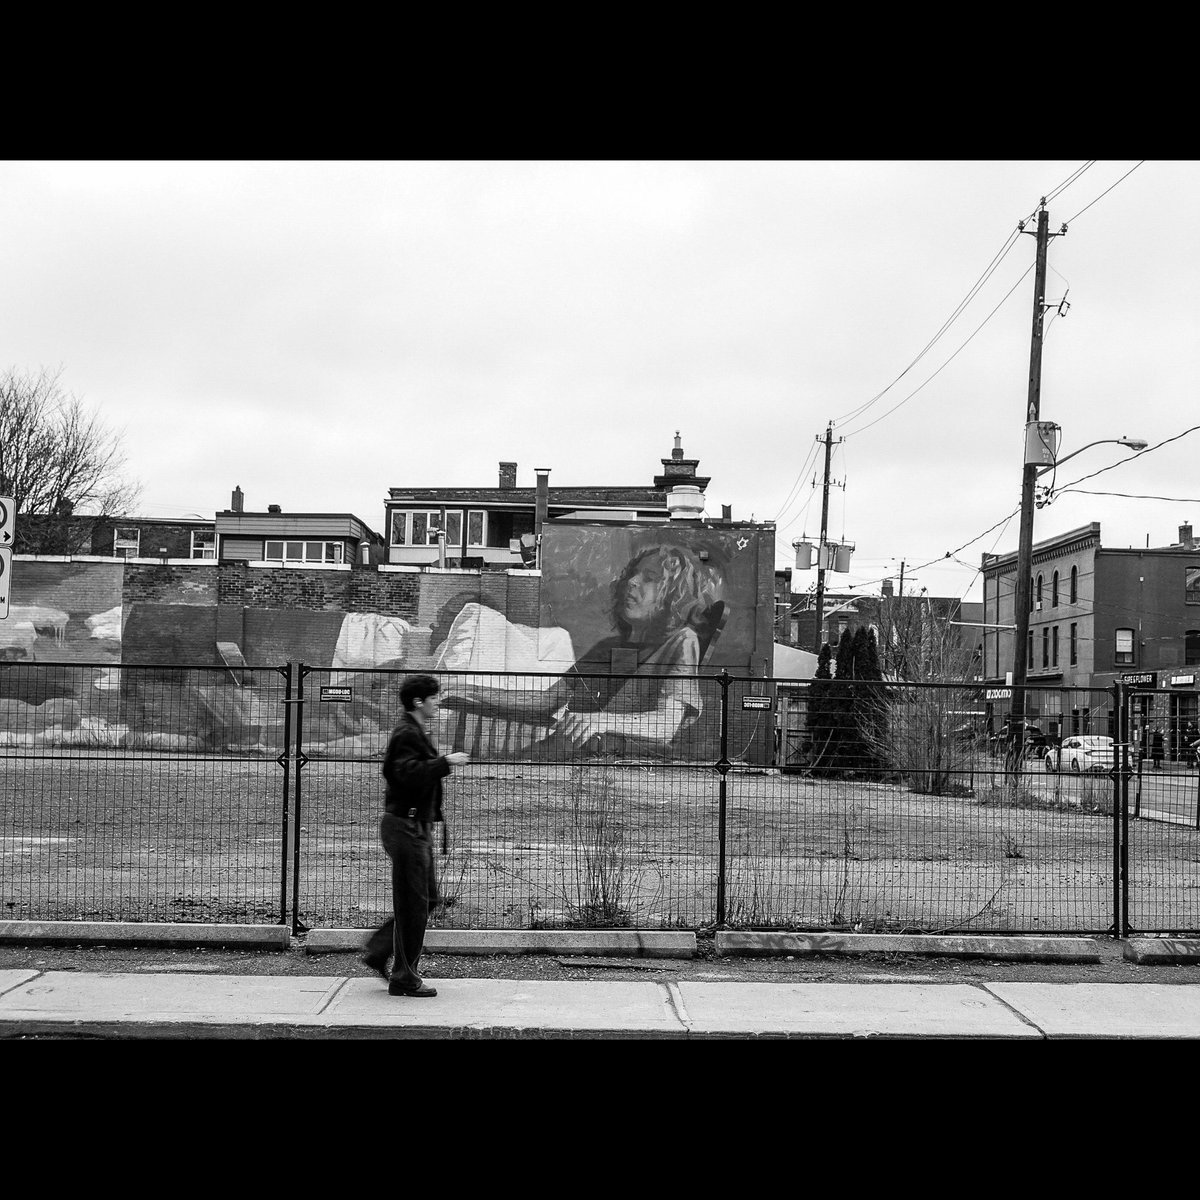 The Surrogate 

Pentax 645 w/ Pentax A 45-85mm f/4.5 lens 📸

Kodak Tri-X - 120 film 🎞

#blackandwhite #filmphotography #LensCulture #blackandwhitephotography #120film #blackandwhitefilm #abandoned #urbanphotography #abandonedplaces #photography #tone #analoguephotography